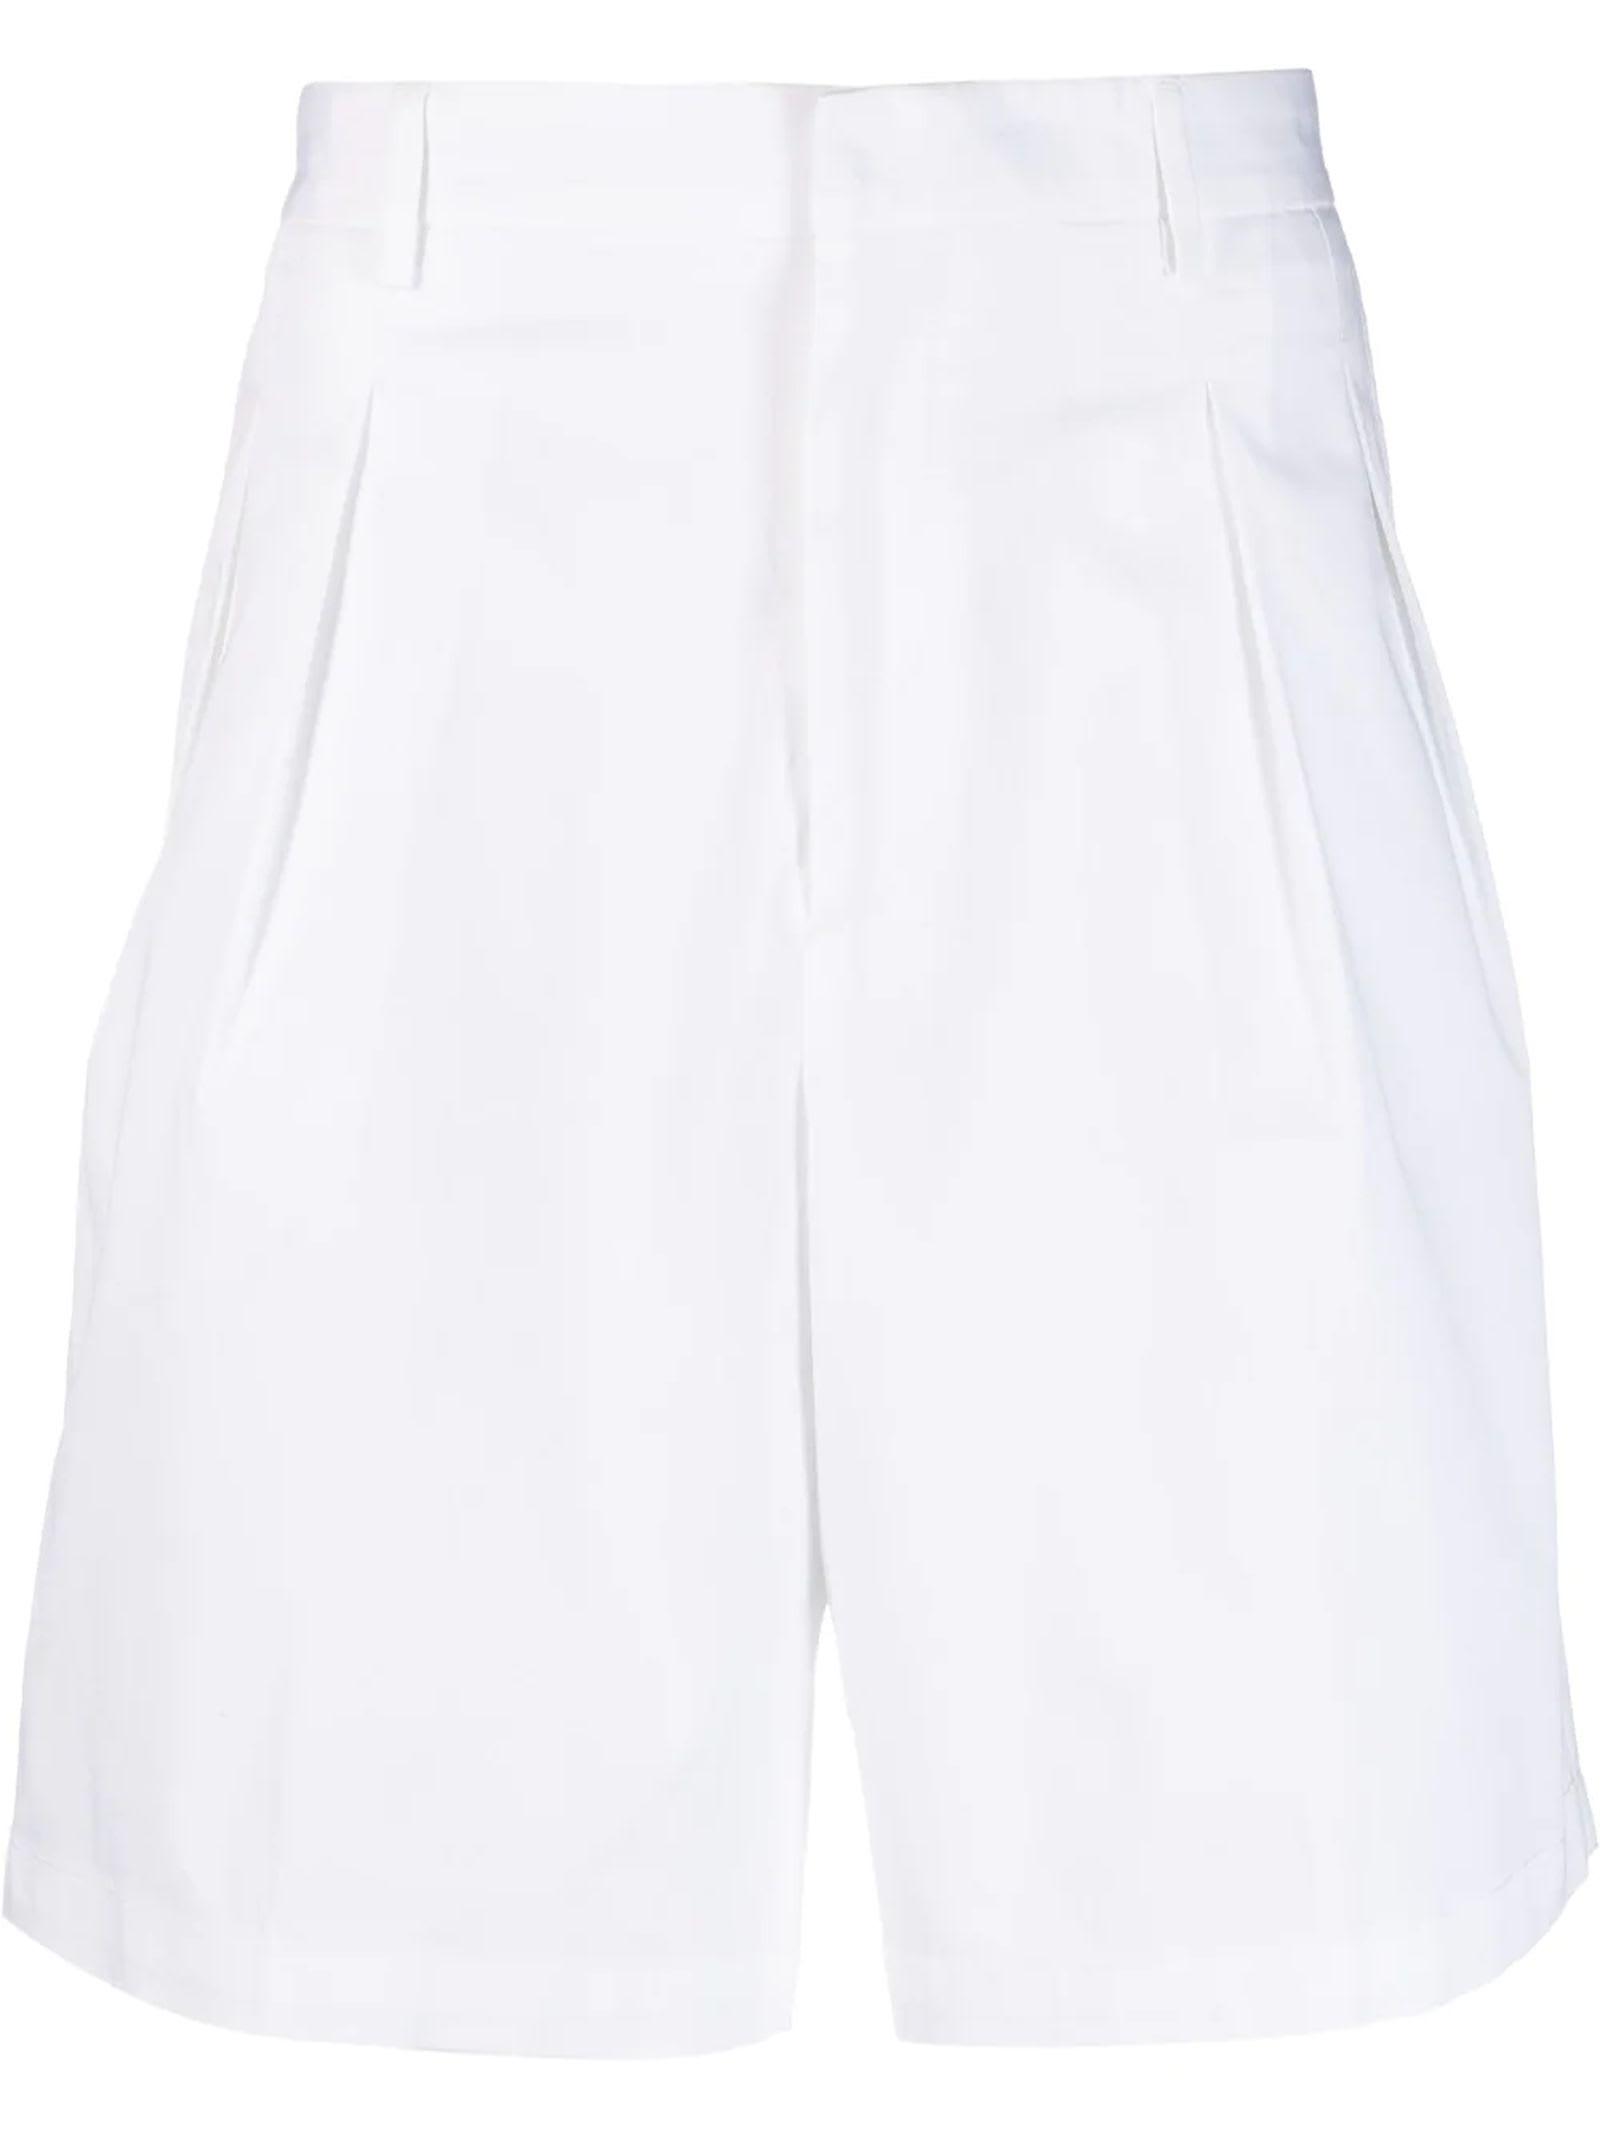 Low Brand Optical White Cotton Blend Chino Shorts